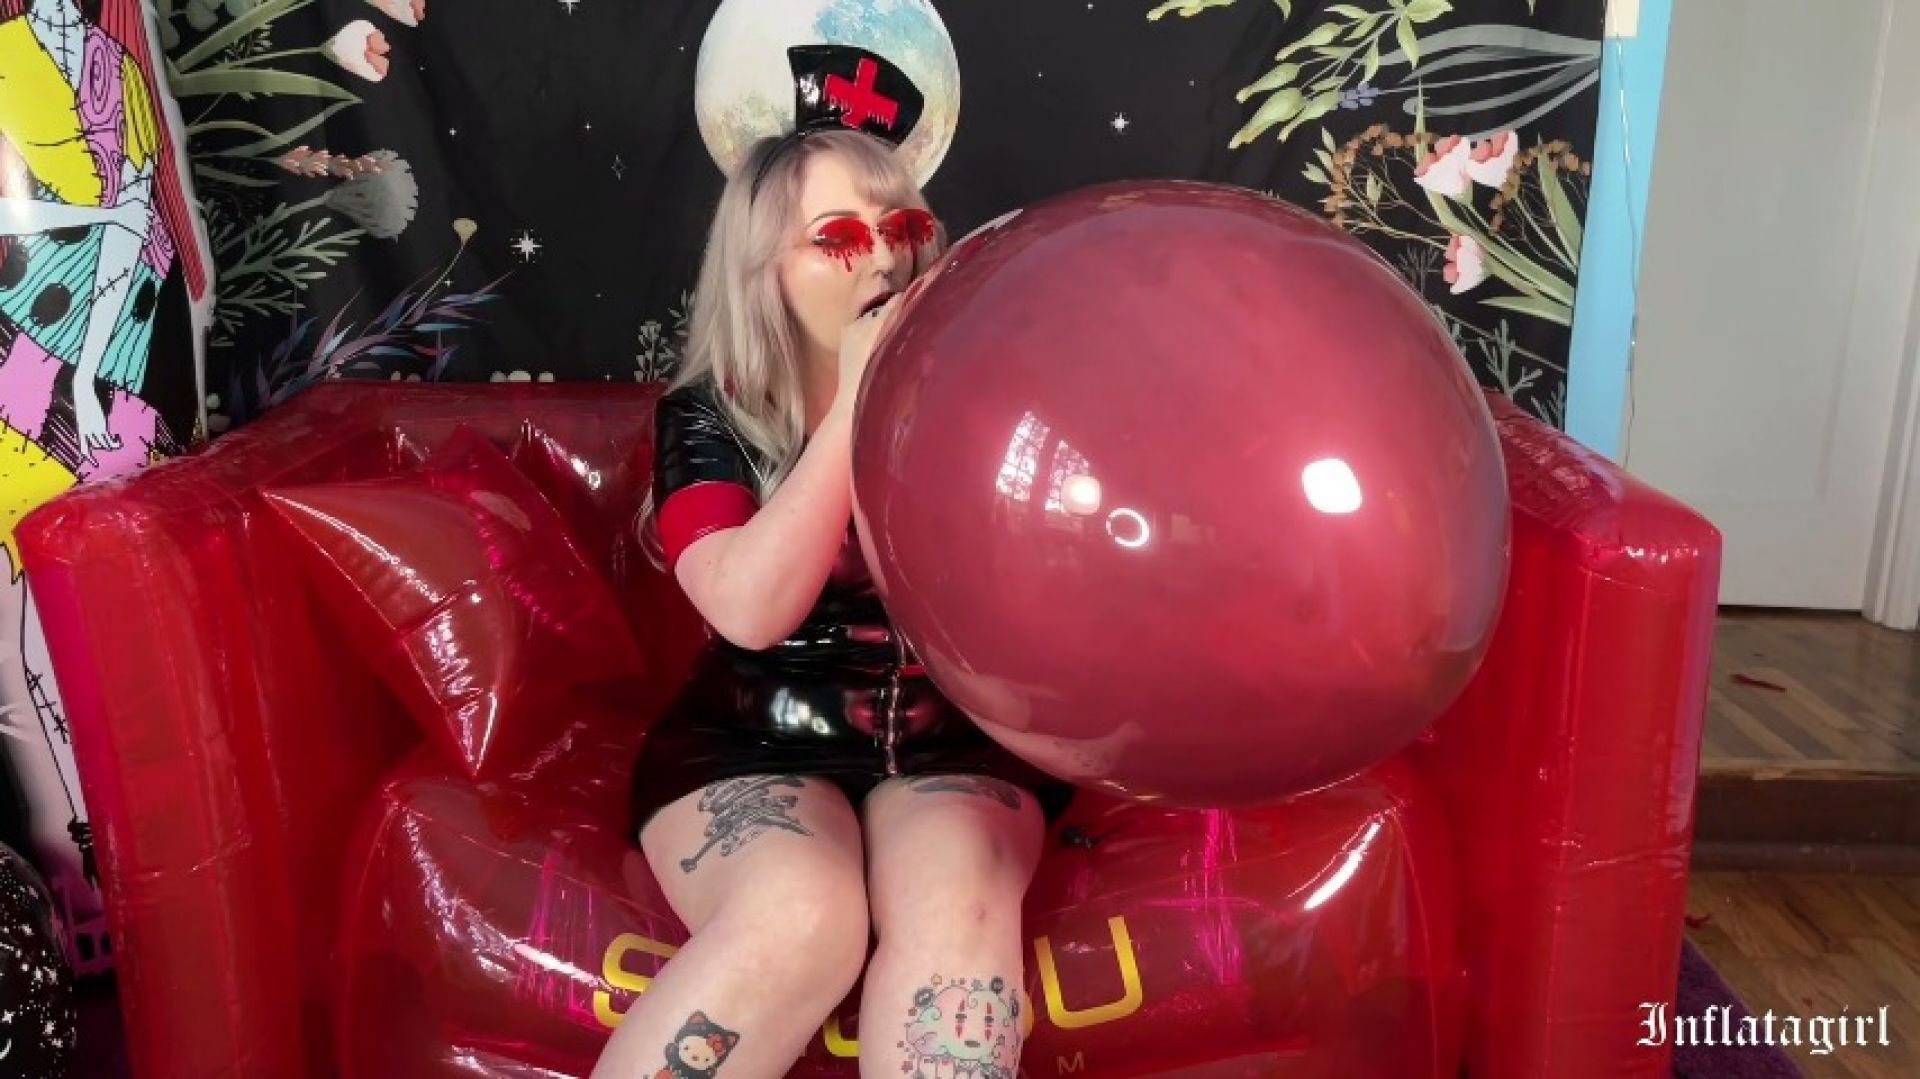 Nurse Uses Blow To Pop Balloon Method